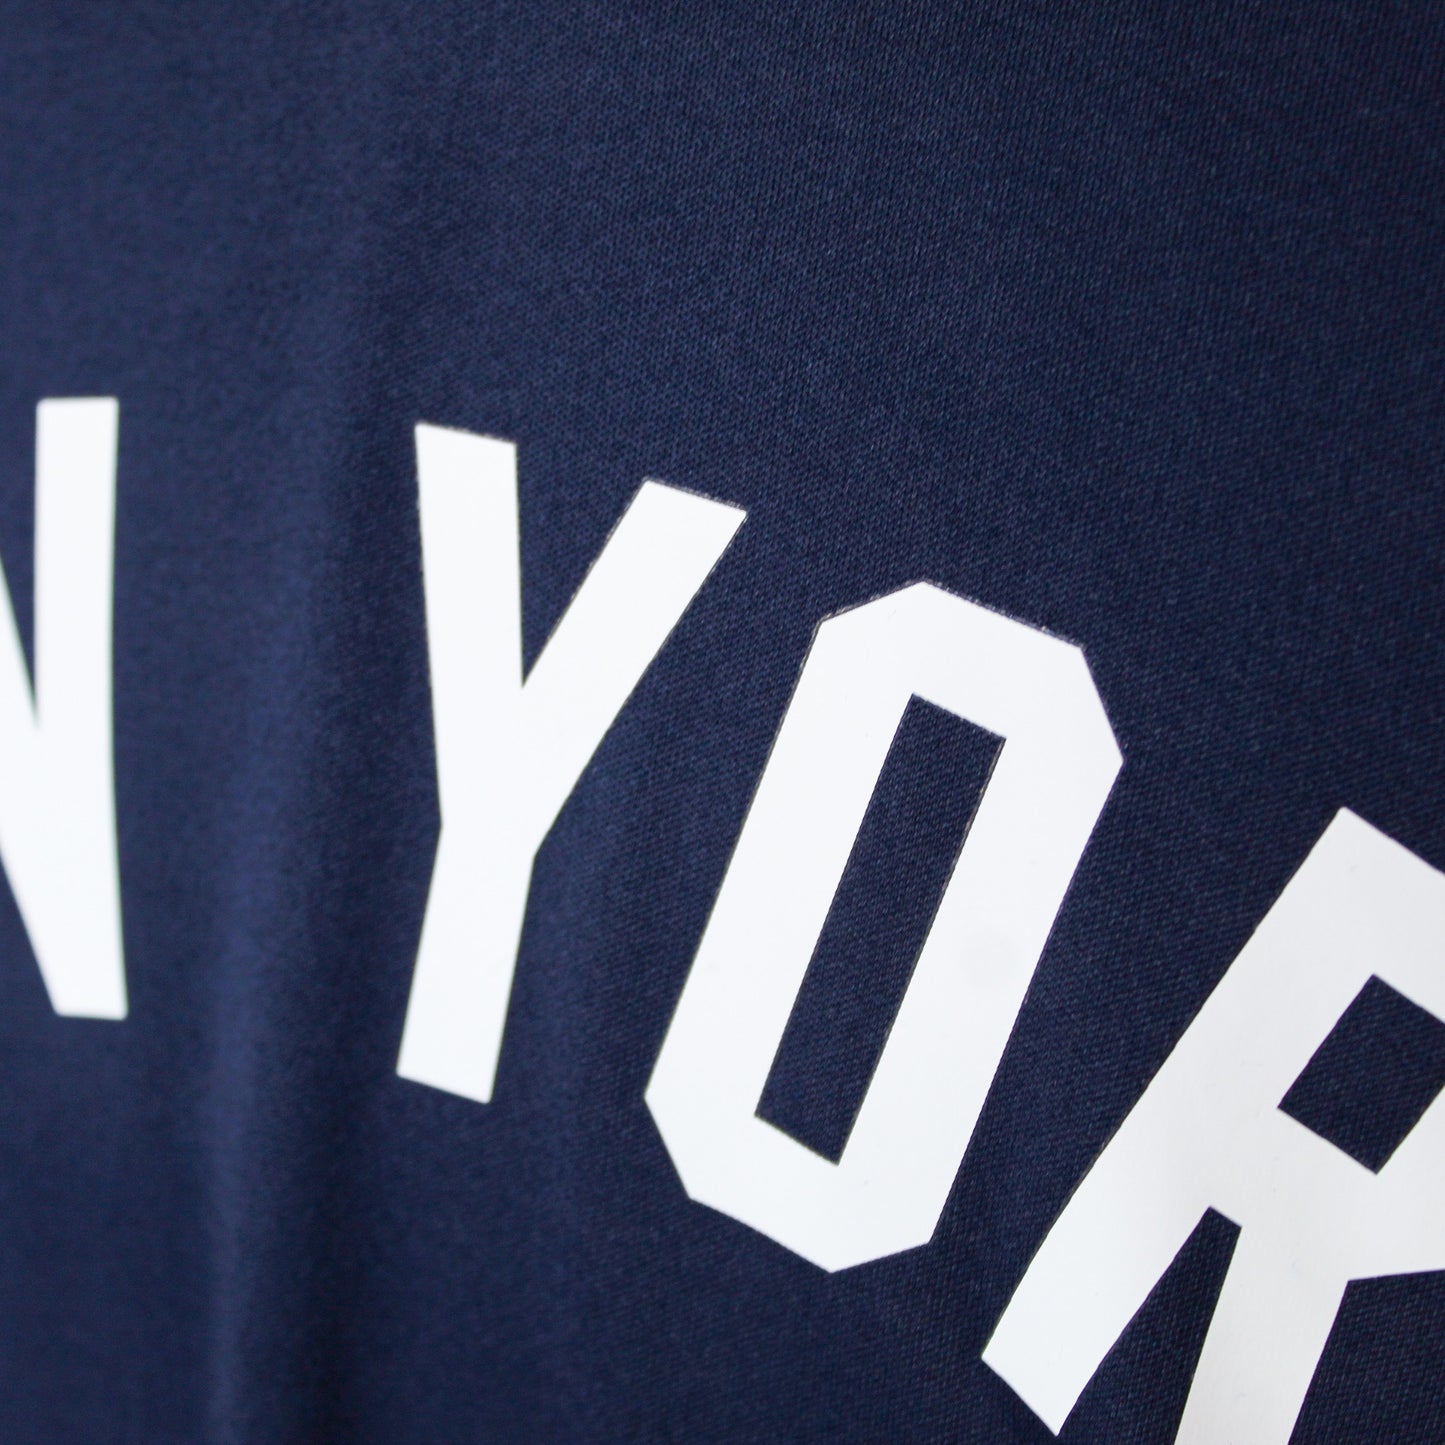 Fanatics True Classics Walk Off New York Yankees V-Neck Shirt mlb baseball jersey